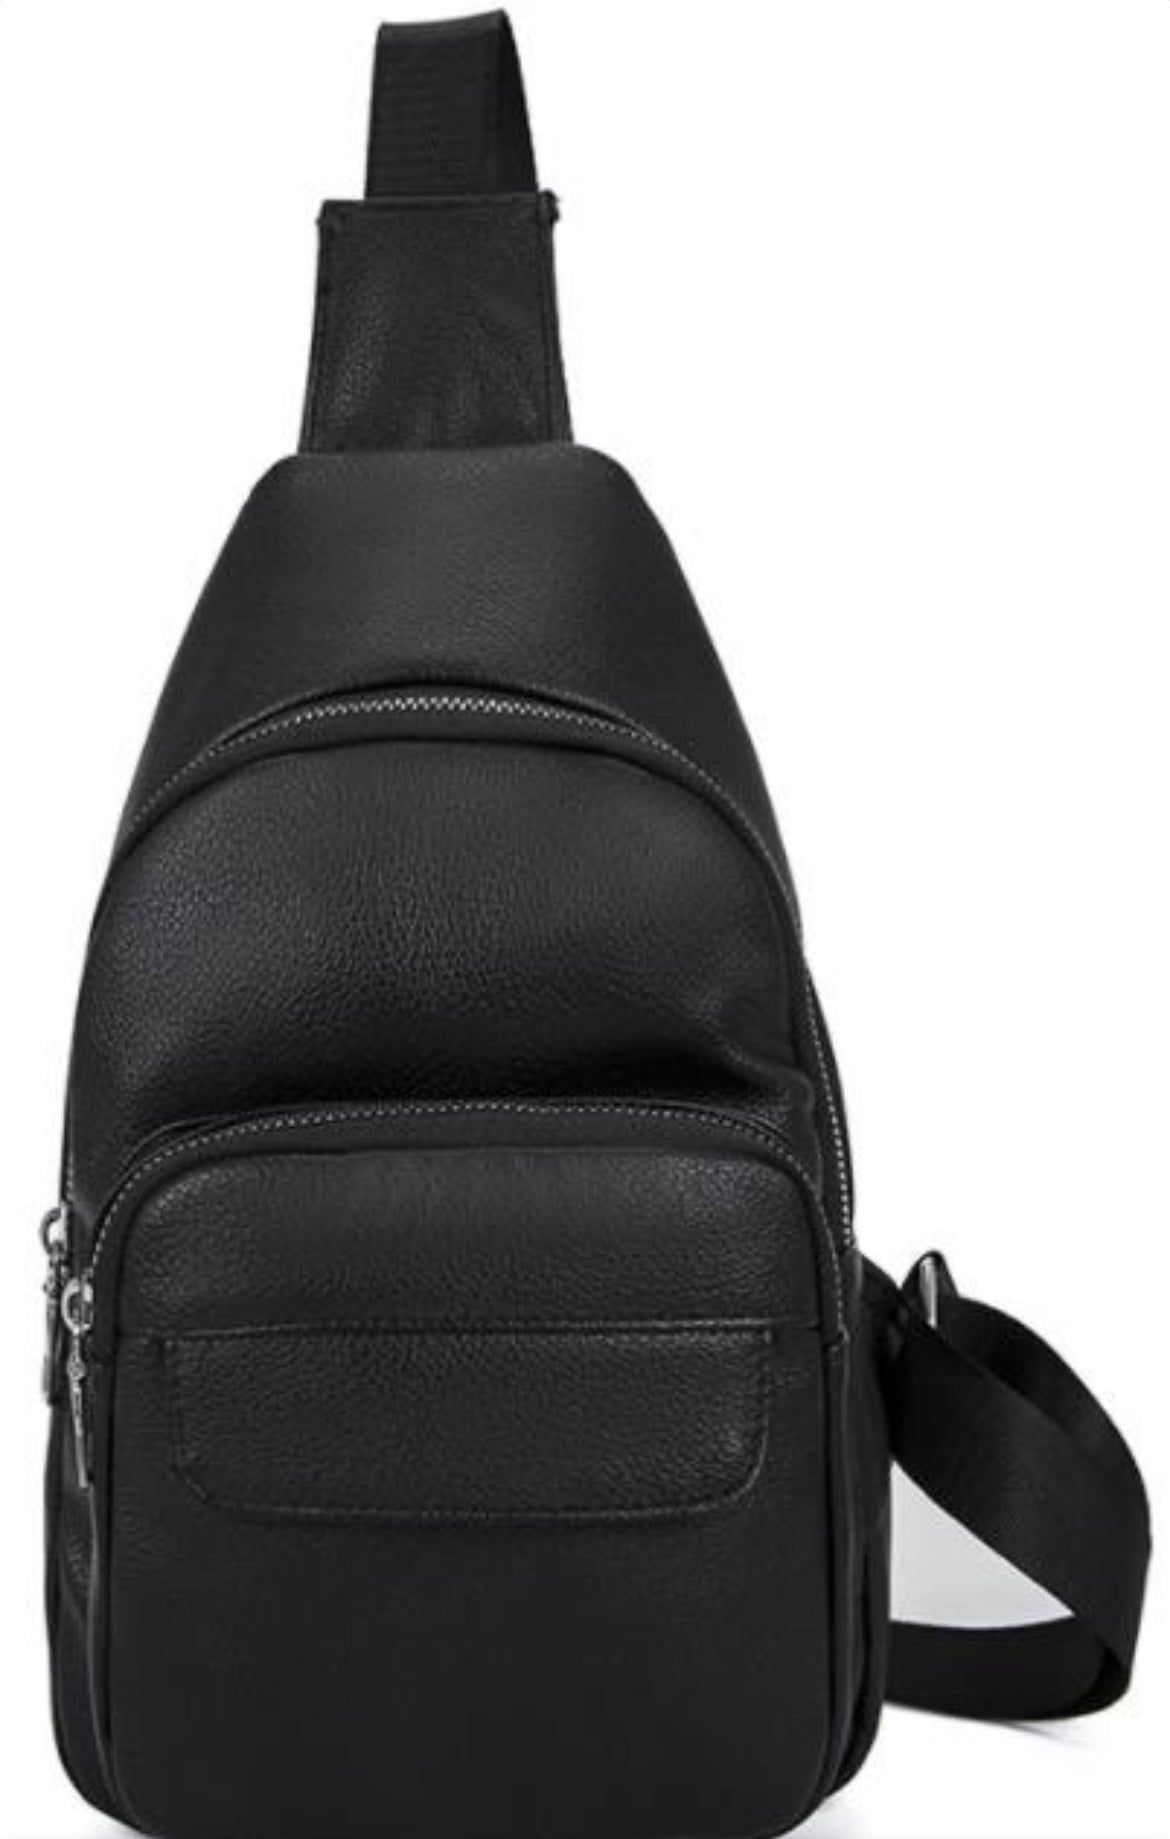 Black sling back purse SL916